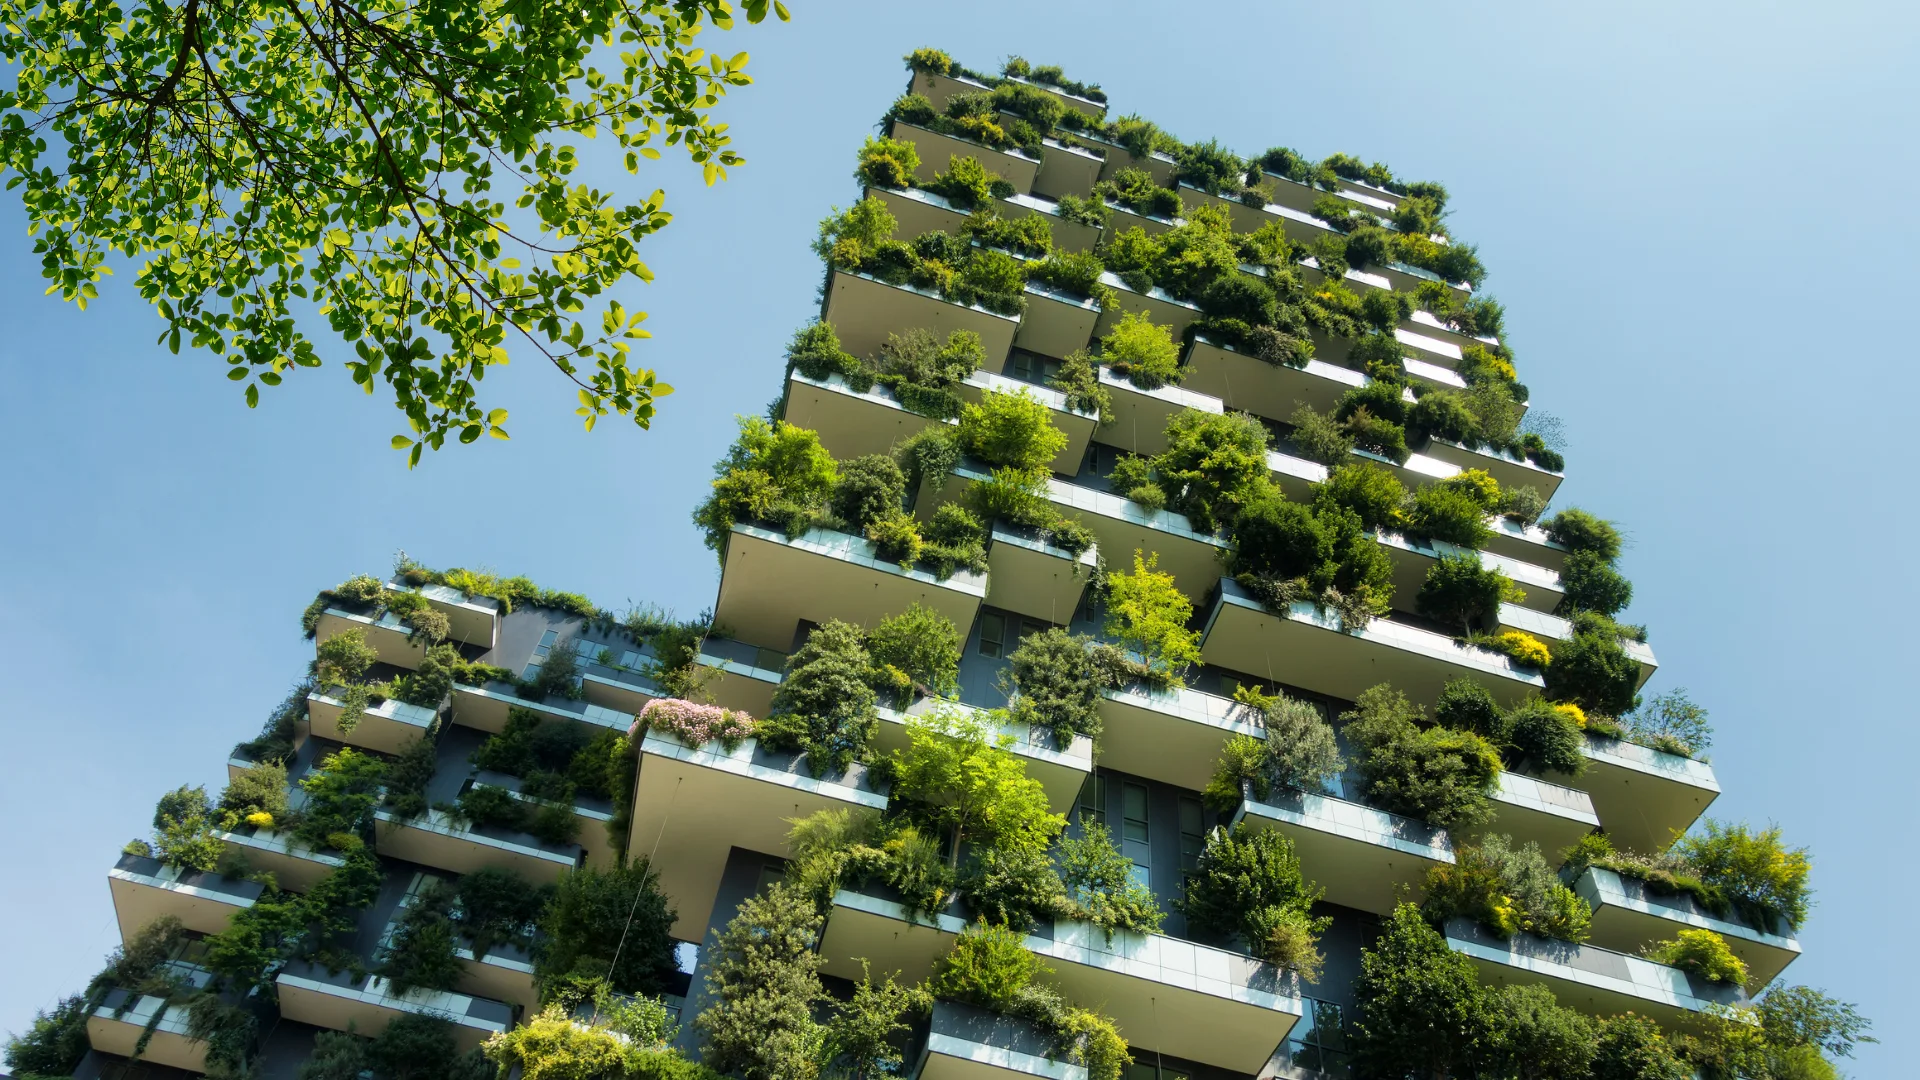 Green Building Education bosco verticale